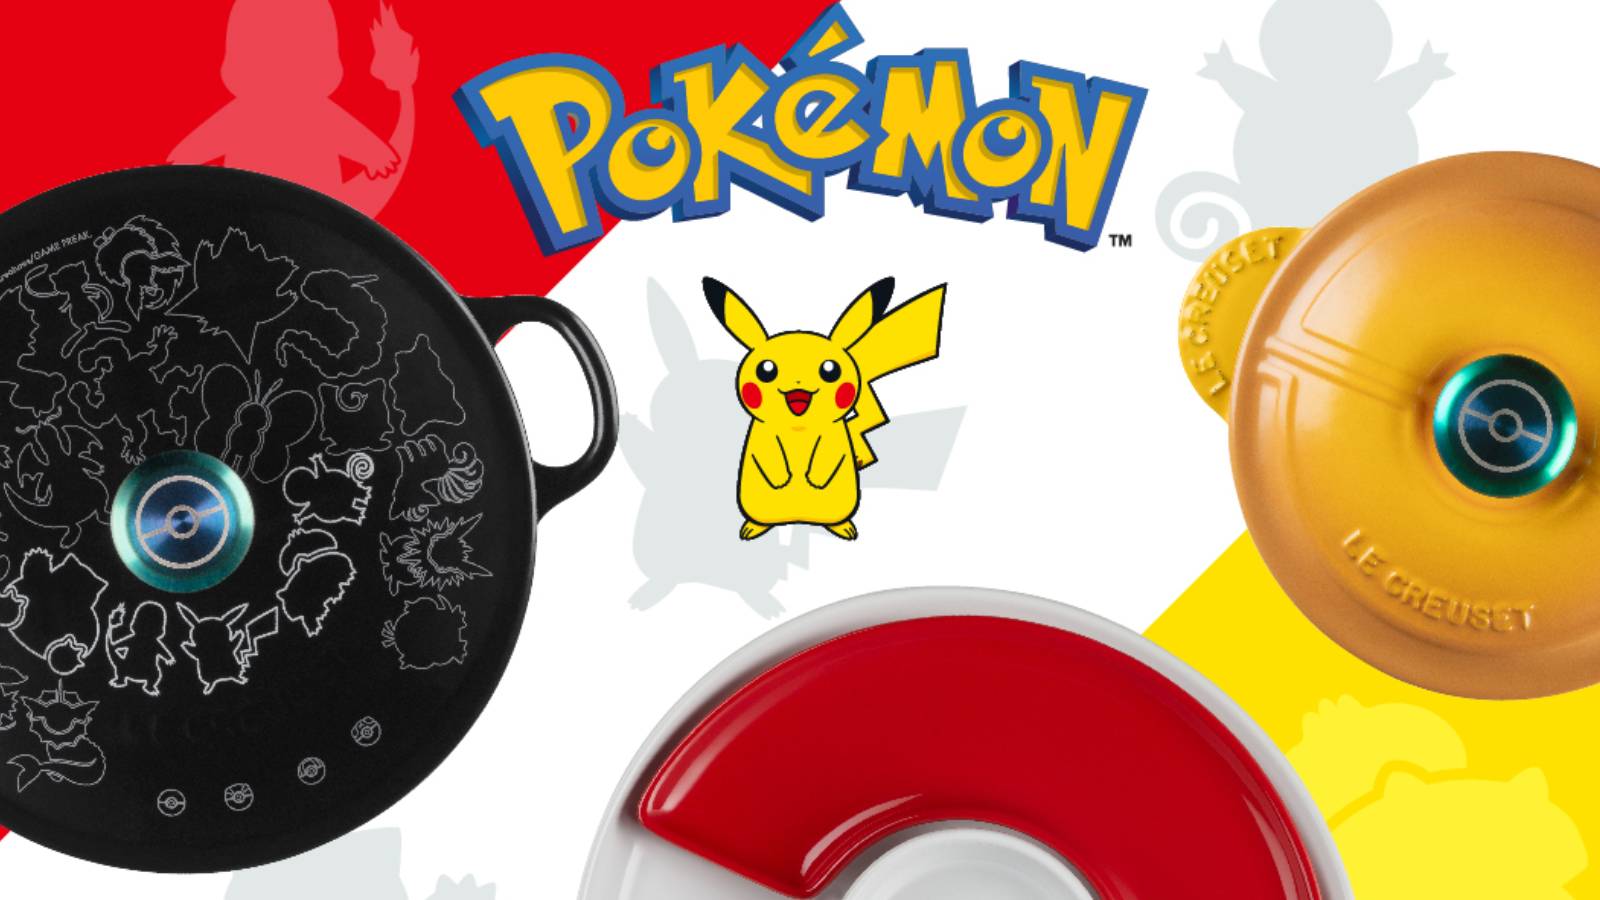 Promotional imagery shows Pikachu alongside several Le Creuset pots